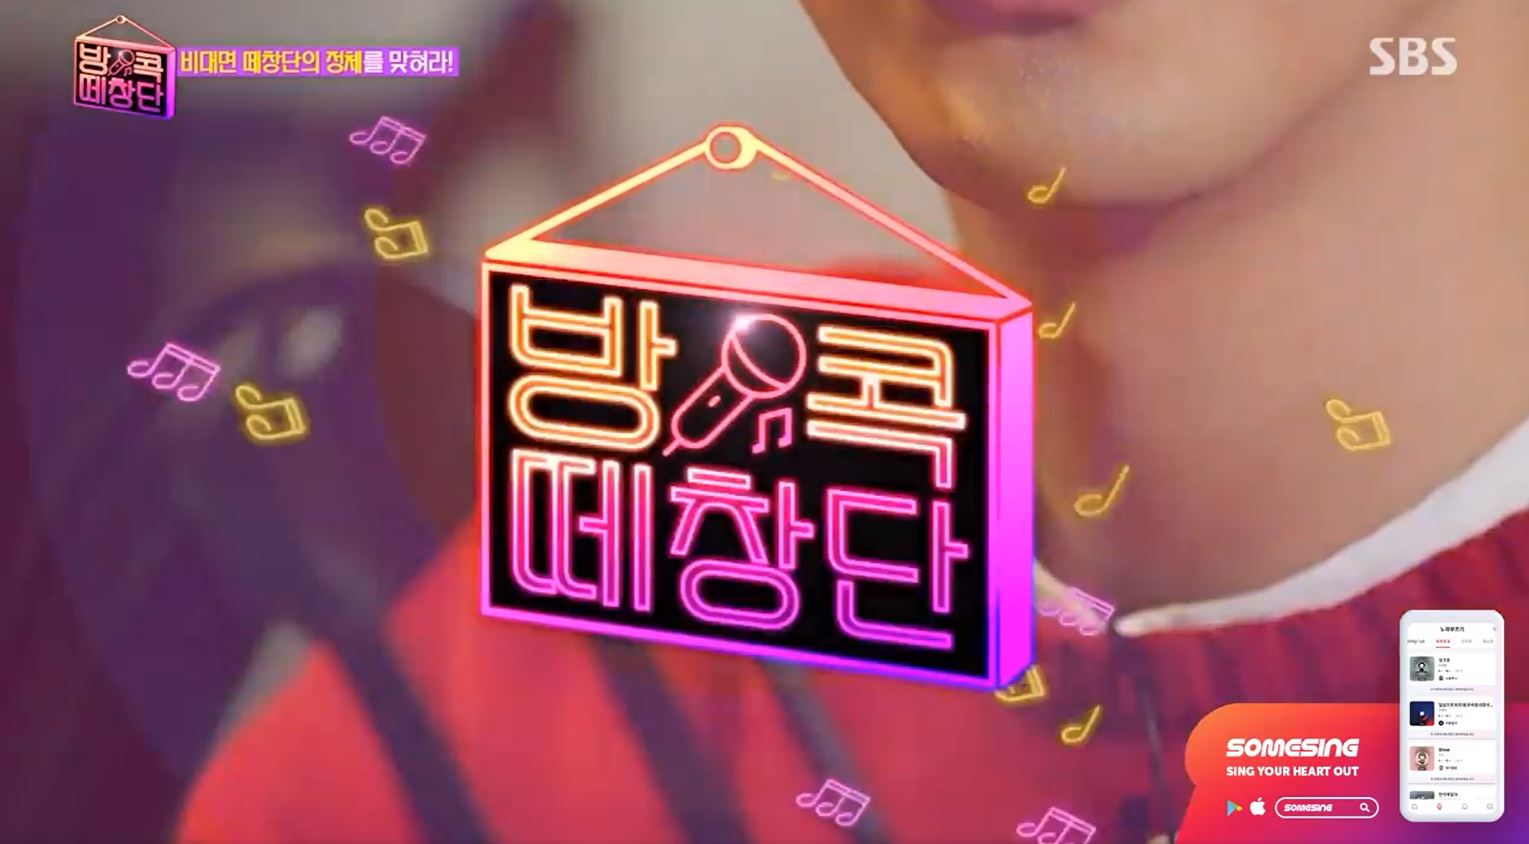 [SOMESING] SBS 파일럿프로그램 '방콕떼창단'에 "썸씽"이 떴습니다 ♬♪